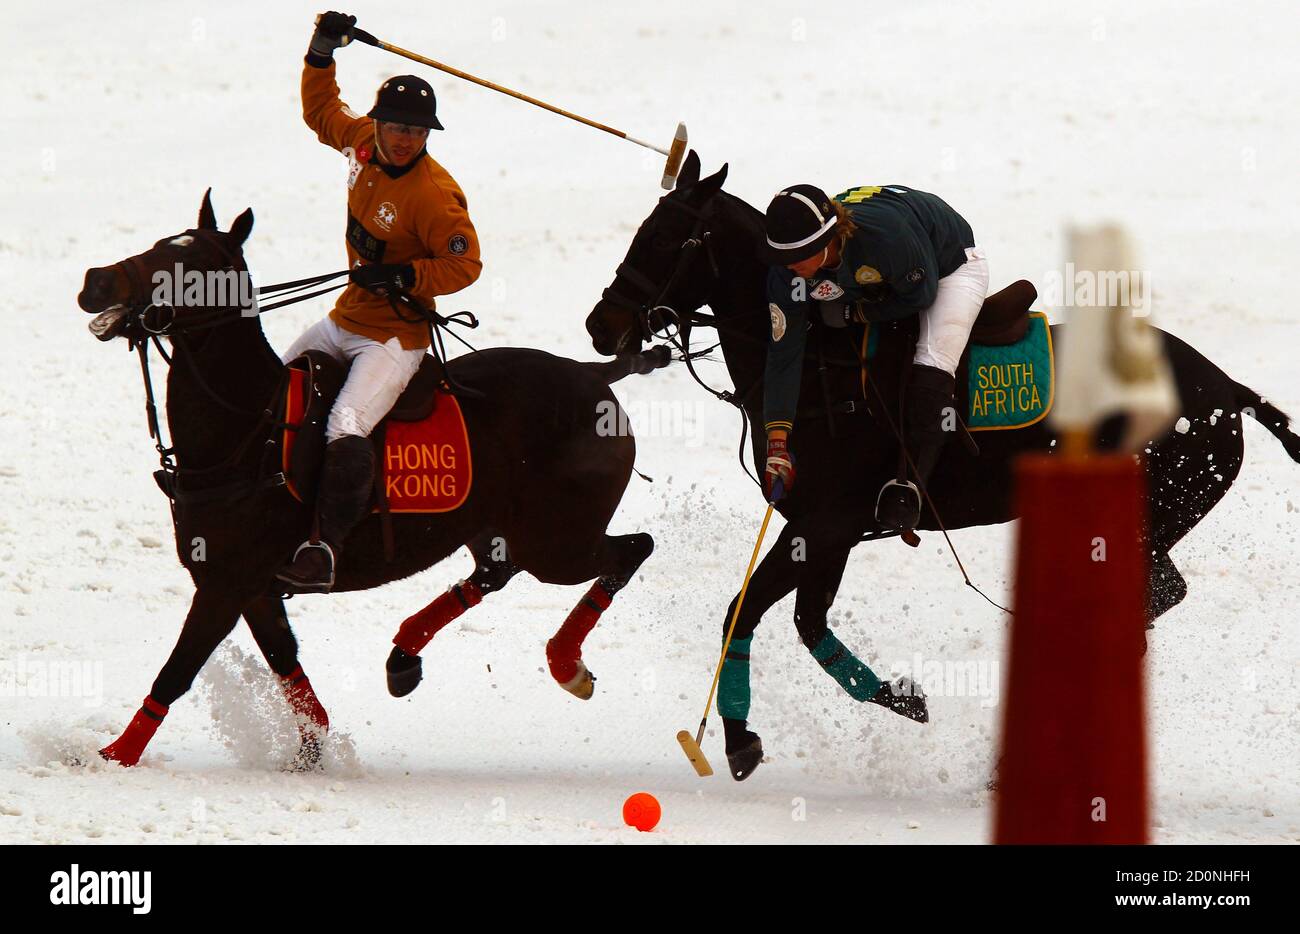 Martin Inchauspe (L) de Hong Kong compite por el balón con Leroux Hendricks  de Sudáfrica durante la final de la Copa Mundial de Polo de nieve,  celebrada en el Goldin Metropolitan Polo